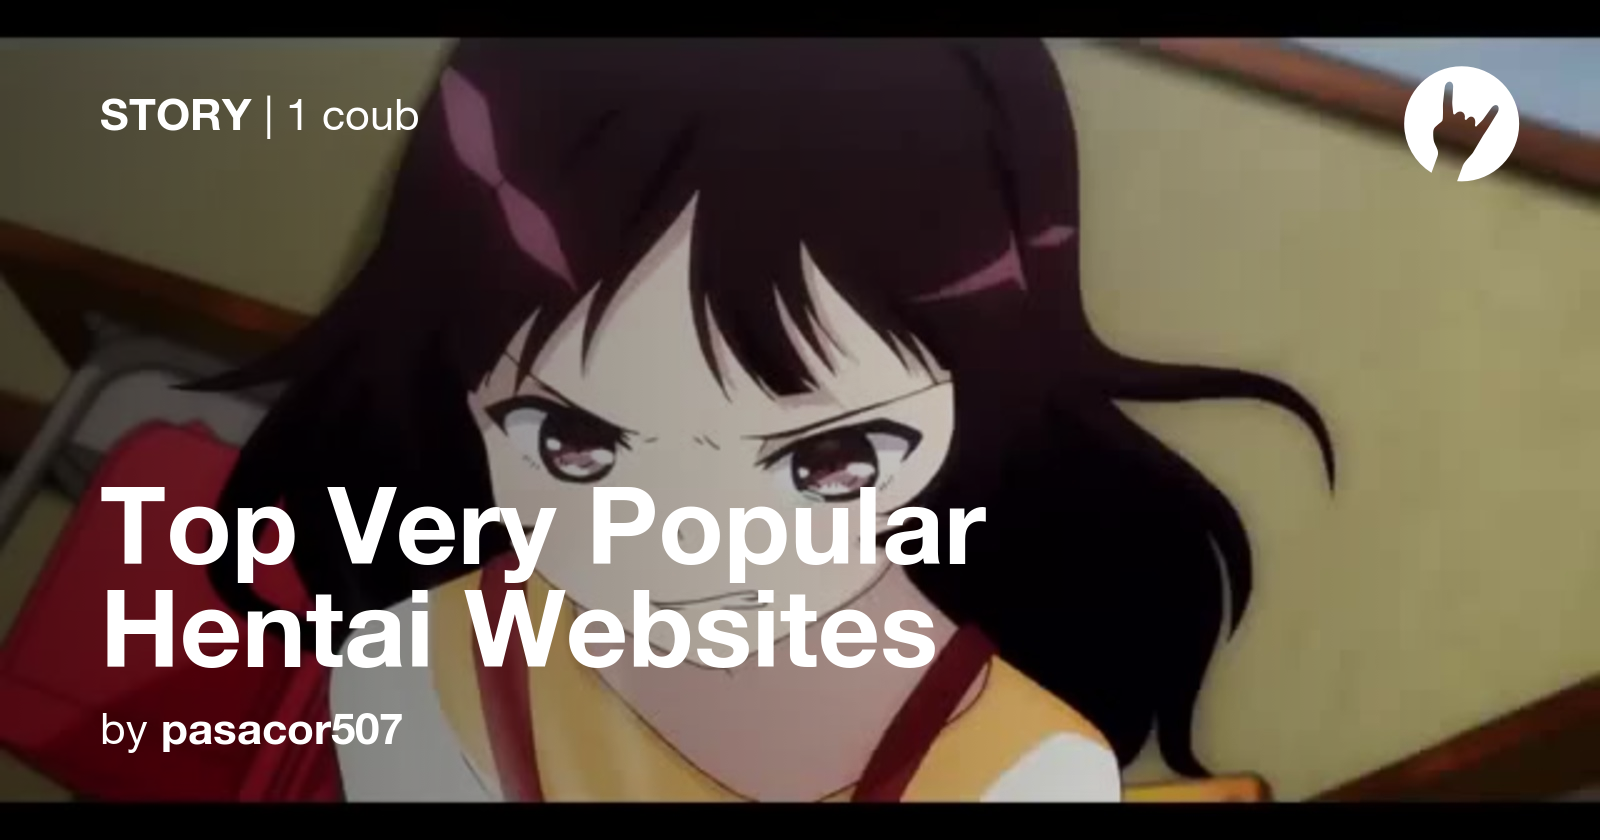 hentai websites reddit